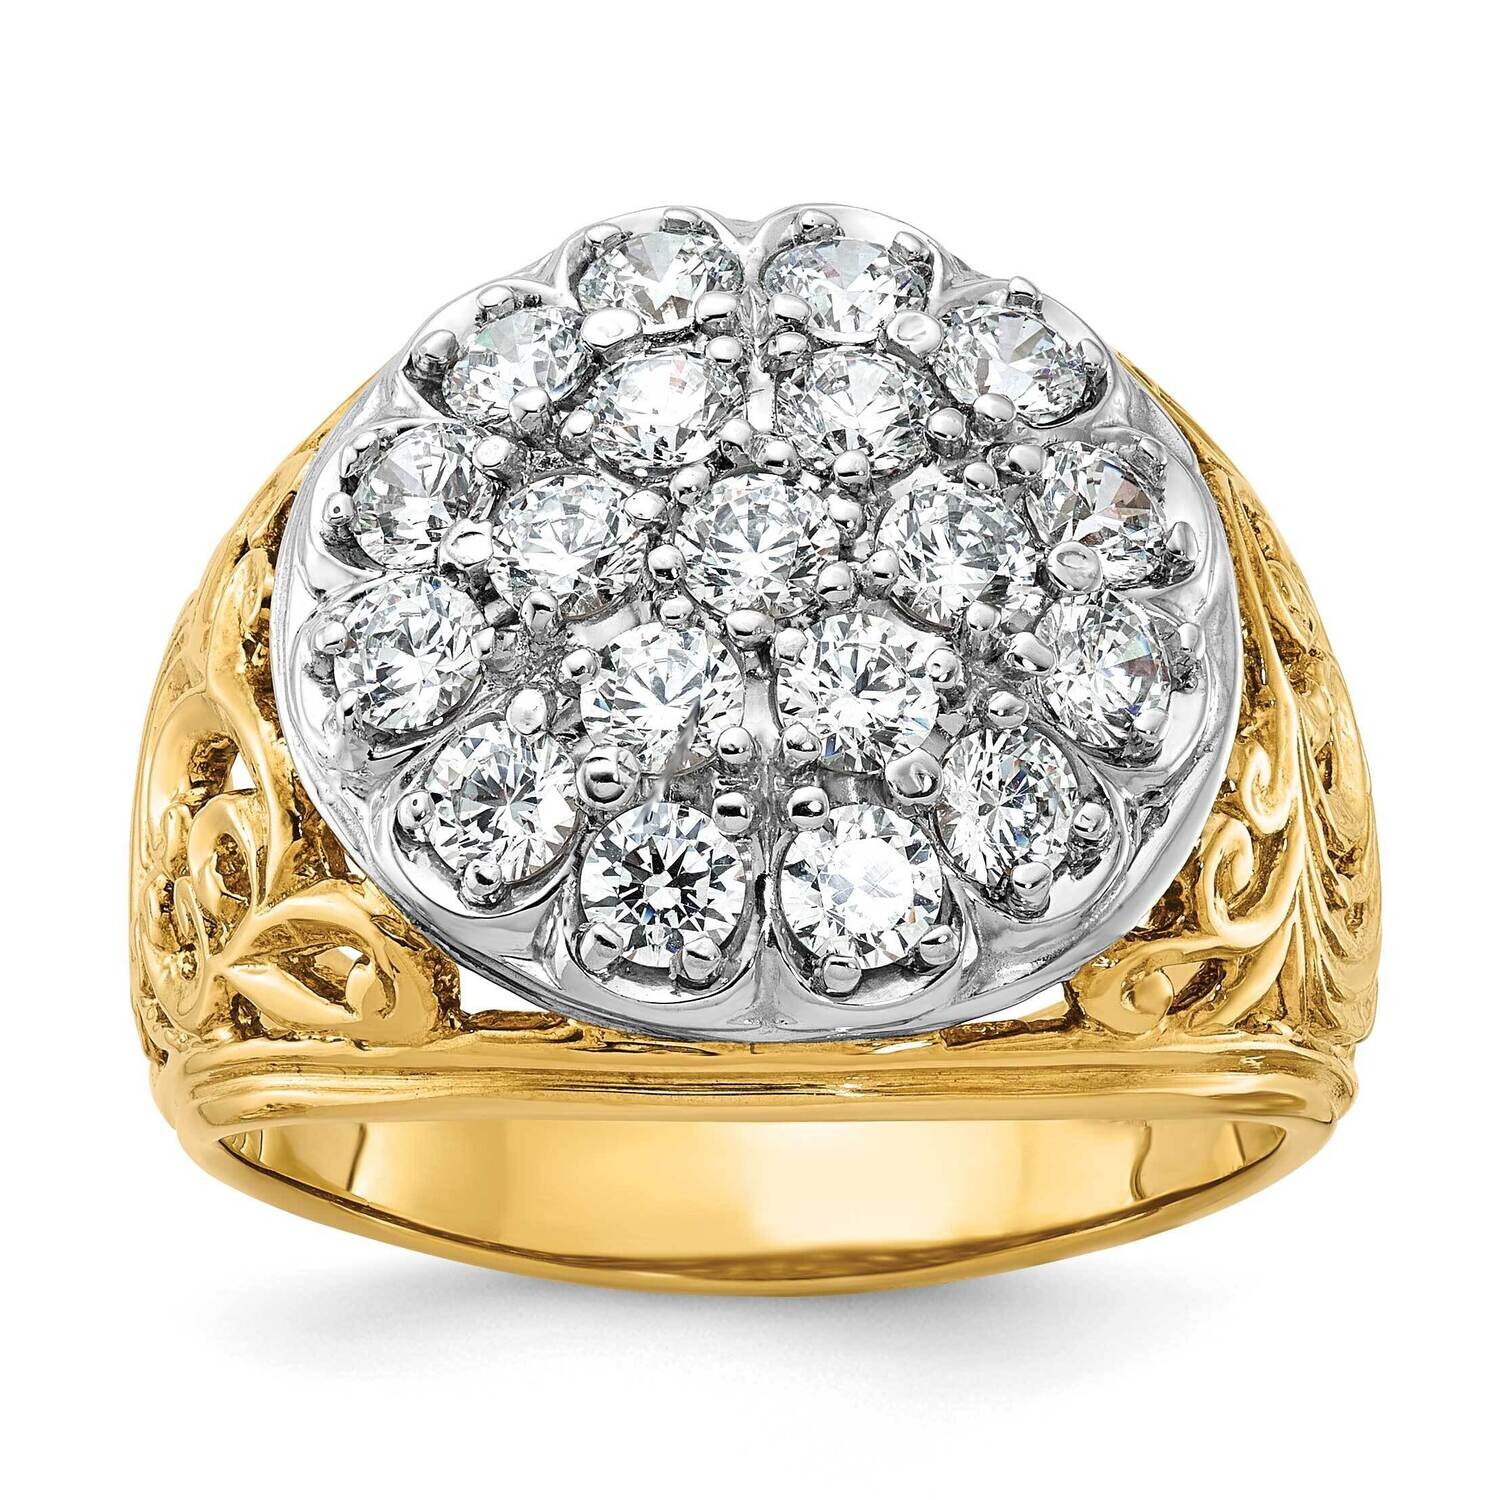 Ibgoodman Men's Polished Filigree 2 Carat Aa Quality Diamond Cluster Ring 14k Two-Tone Gold B01539A-4YWAA